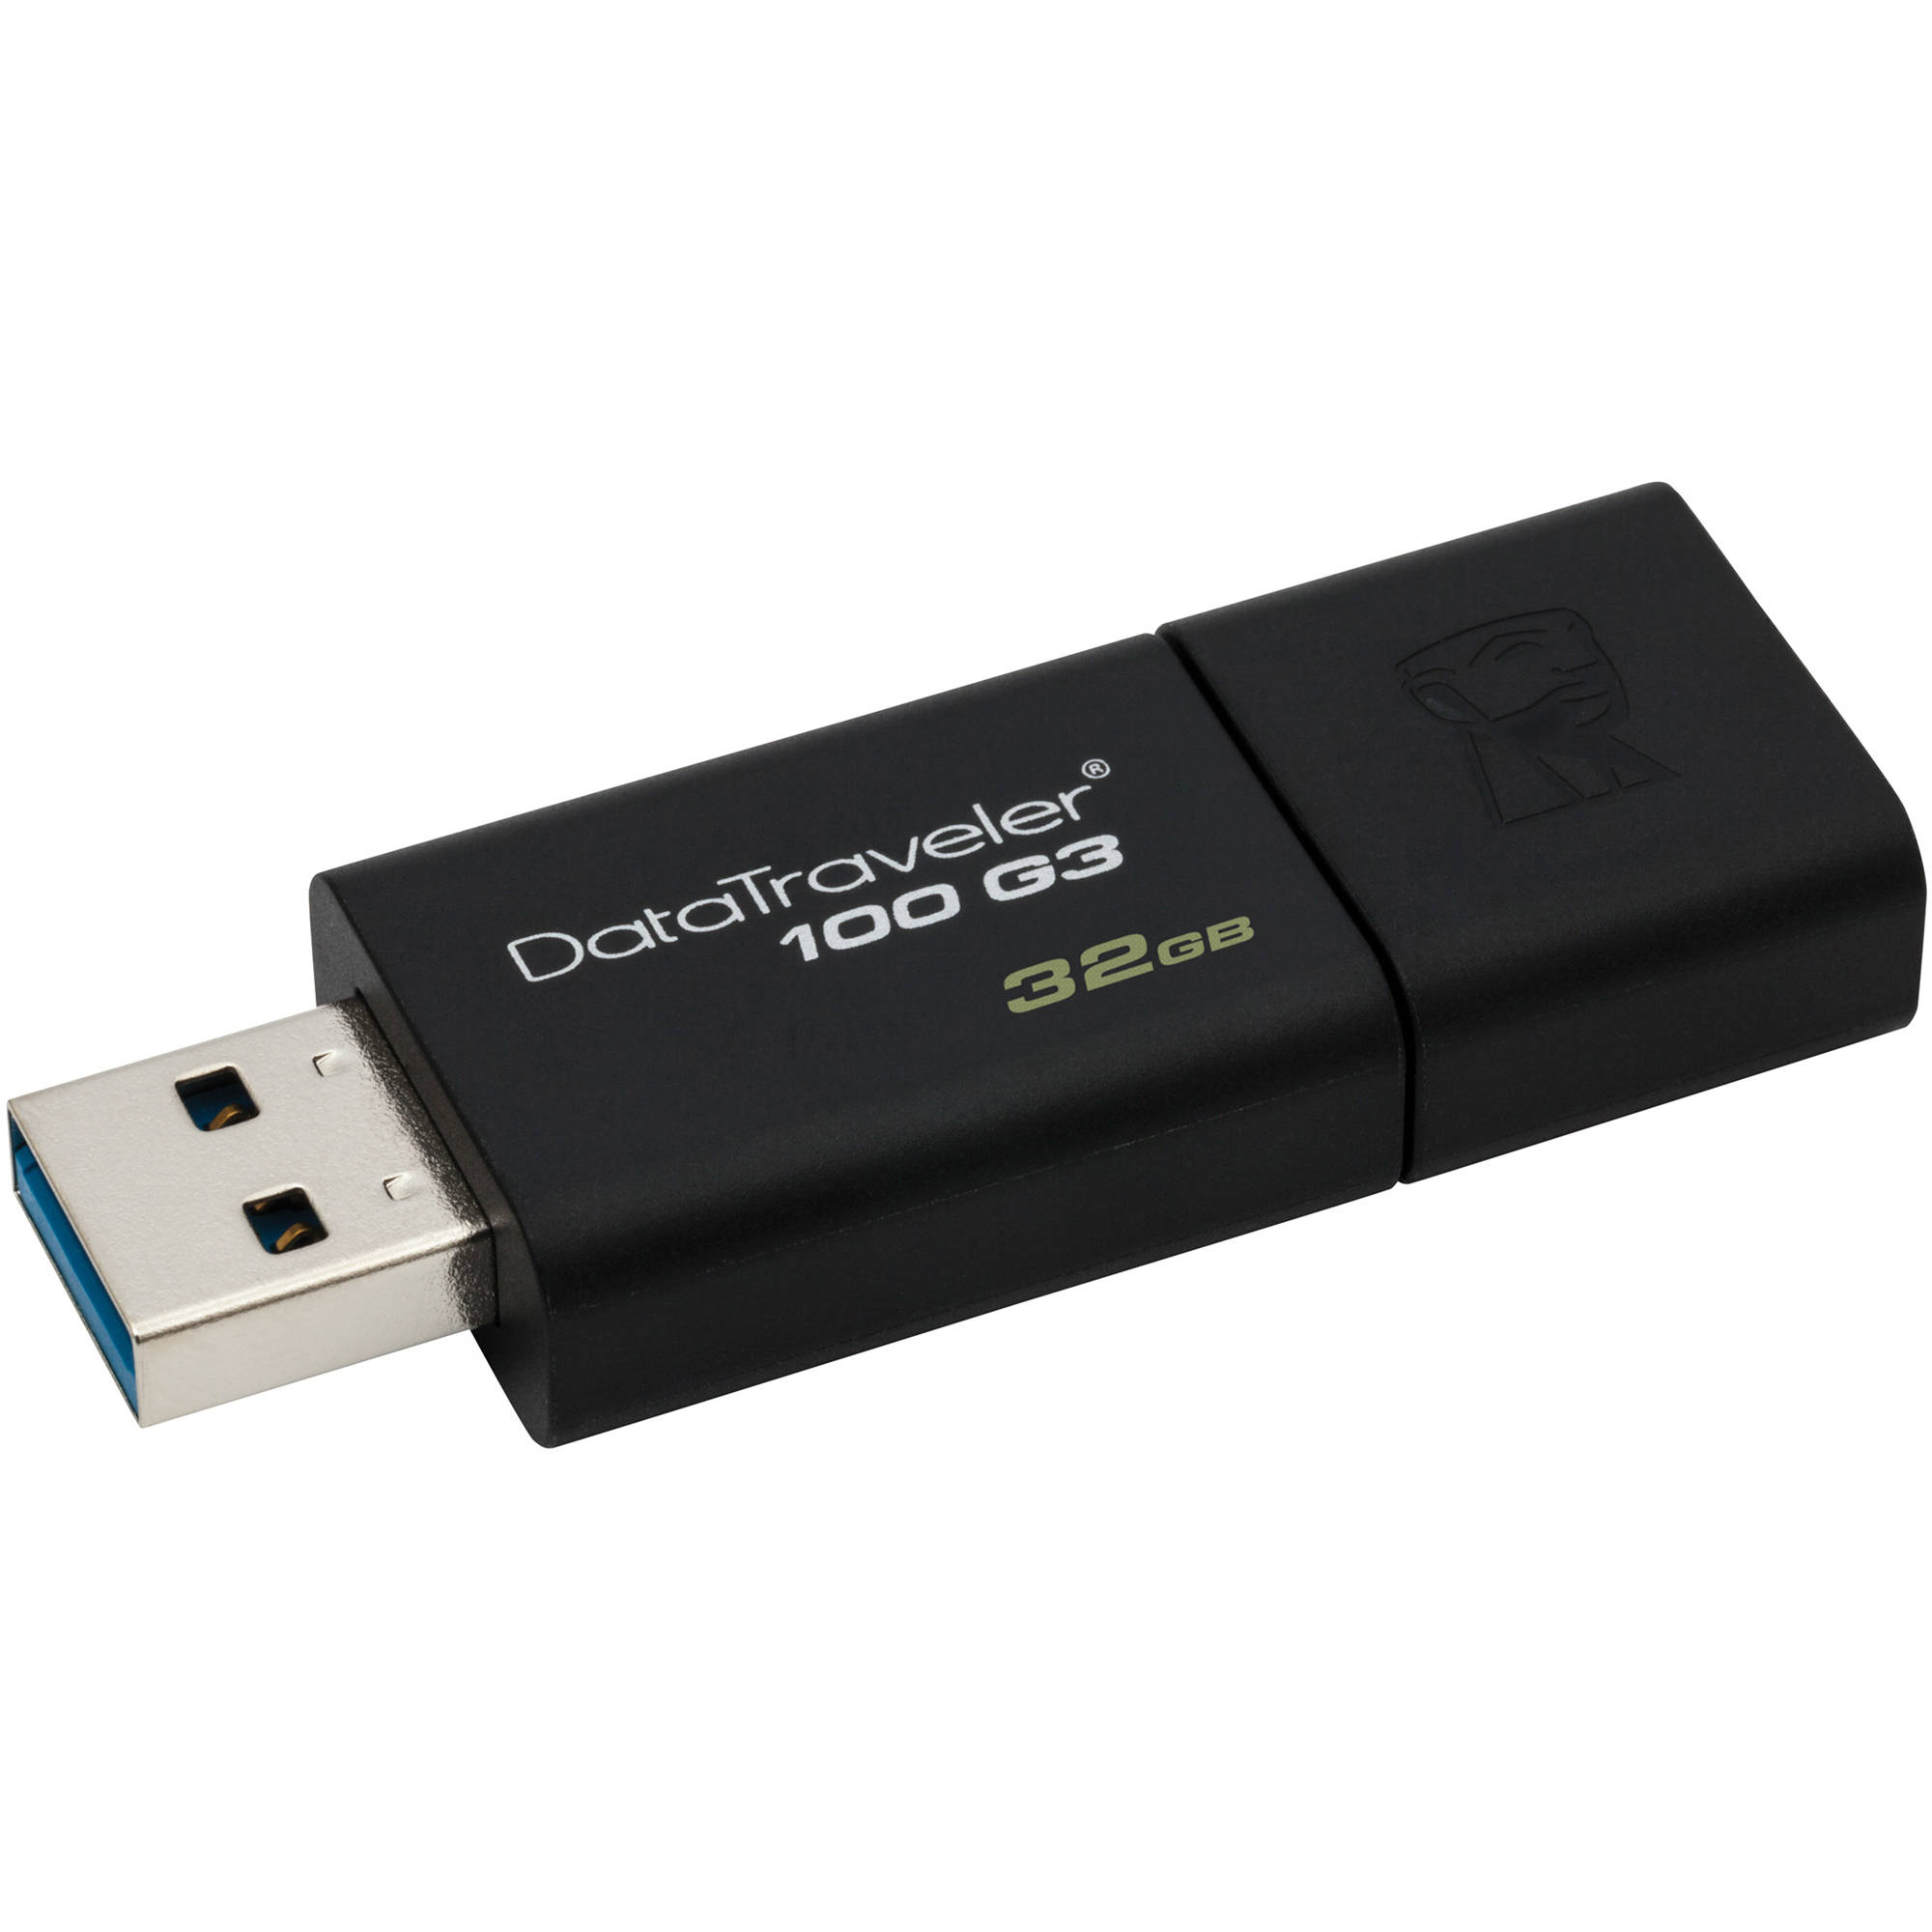 Original Kingston DataTraveler 100 G3 32GB USB 3.0 Flash Drive (DT100G3/32GB)